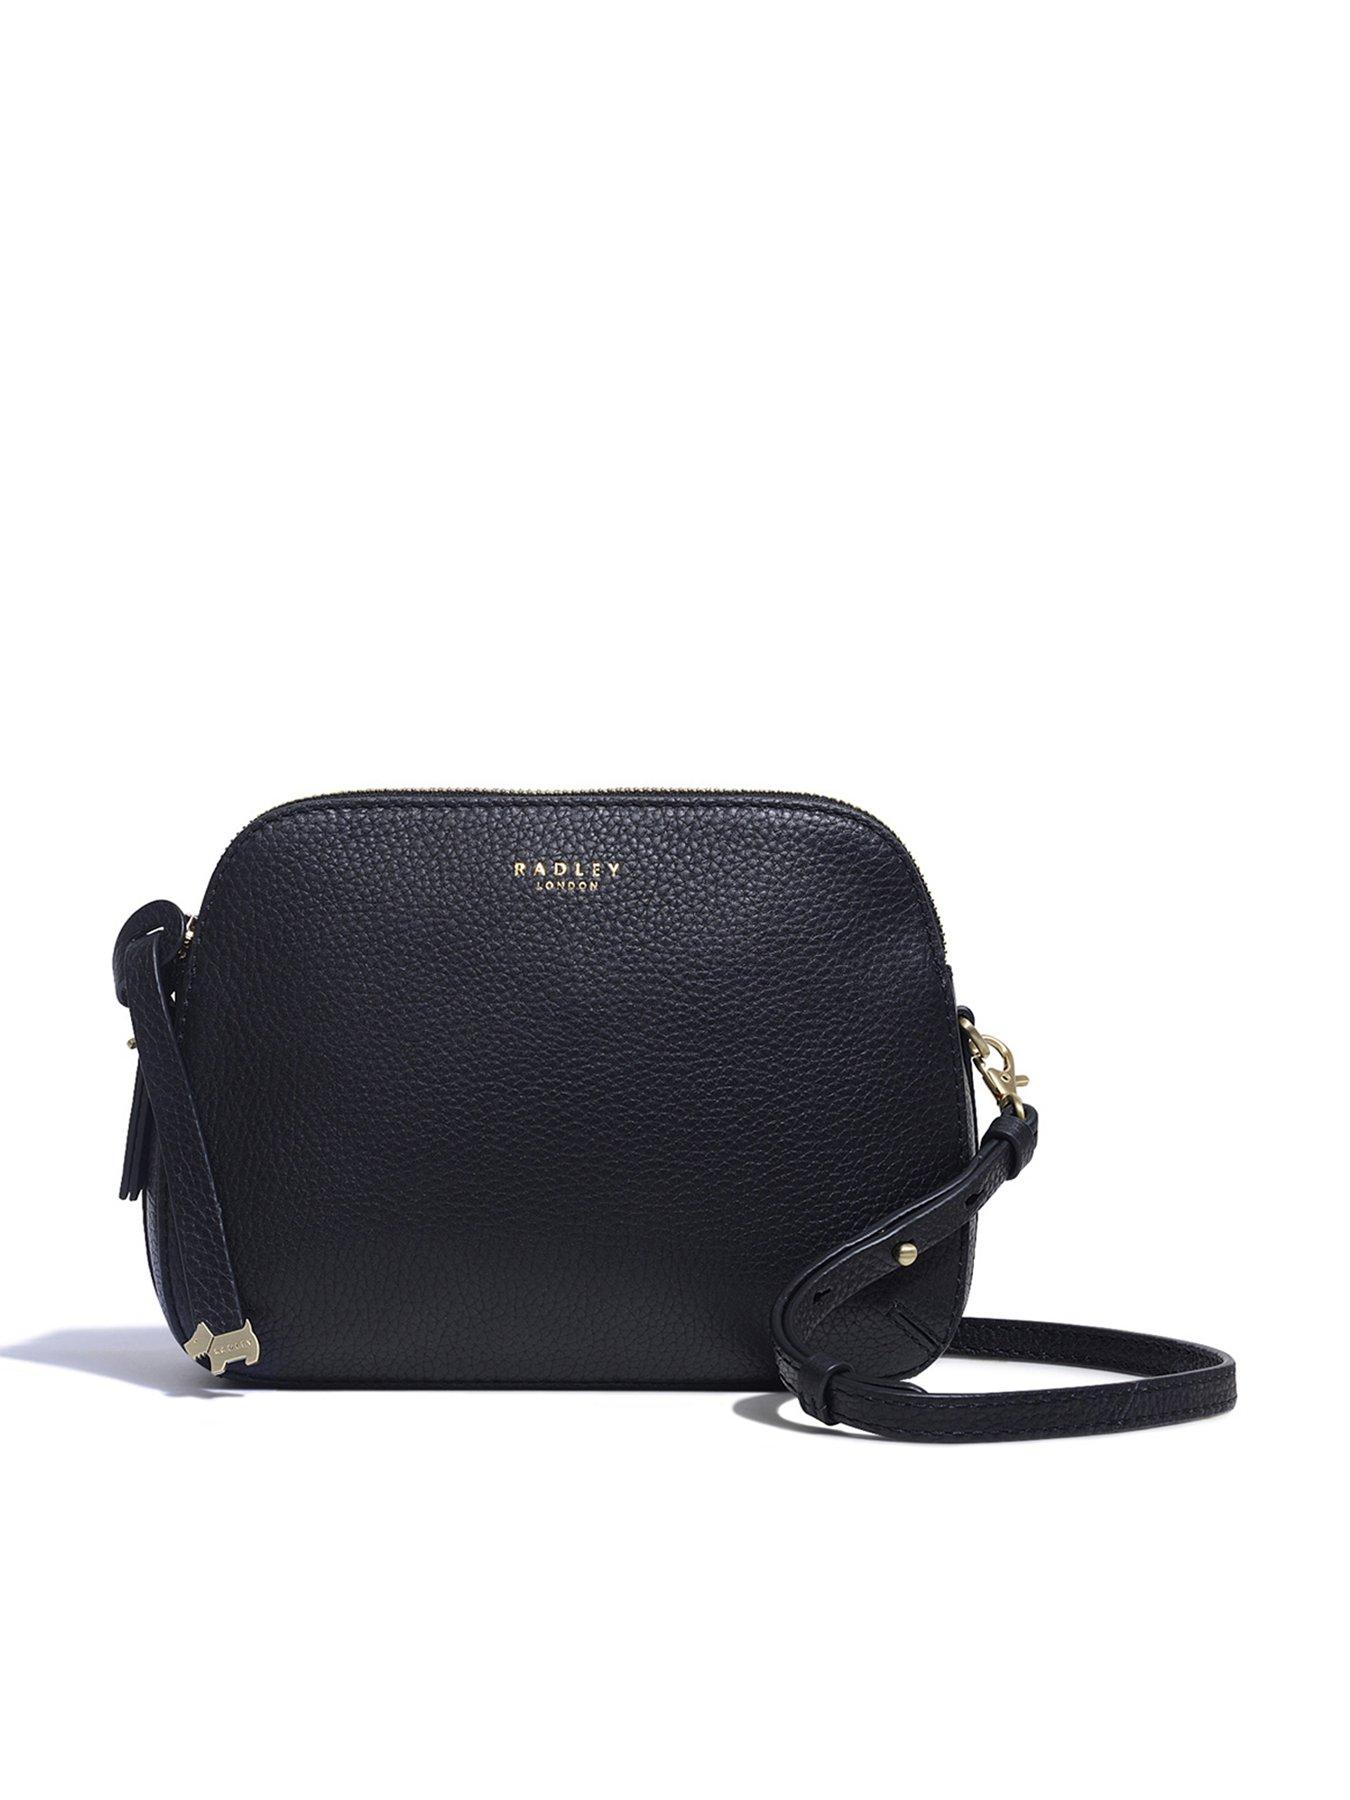 Radley Dukes Place Leather Medium Ziptop Crossbody Bag - Black | very.co.uk